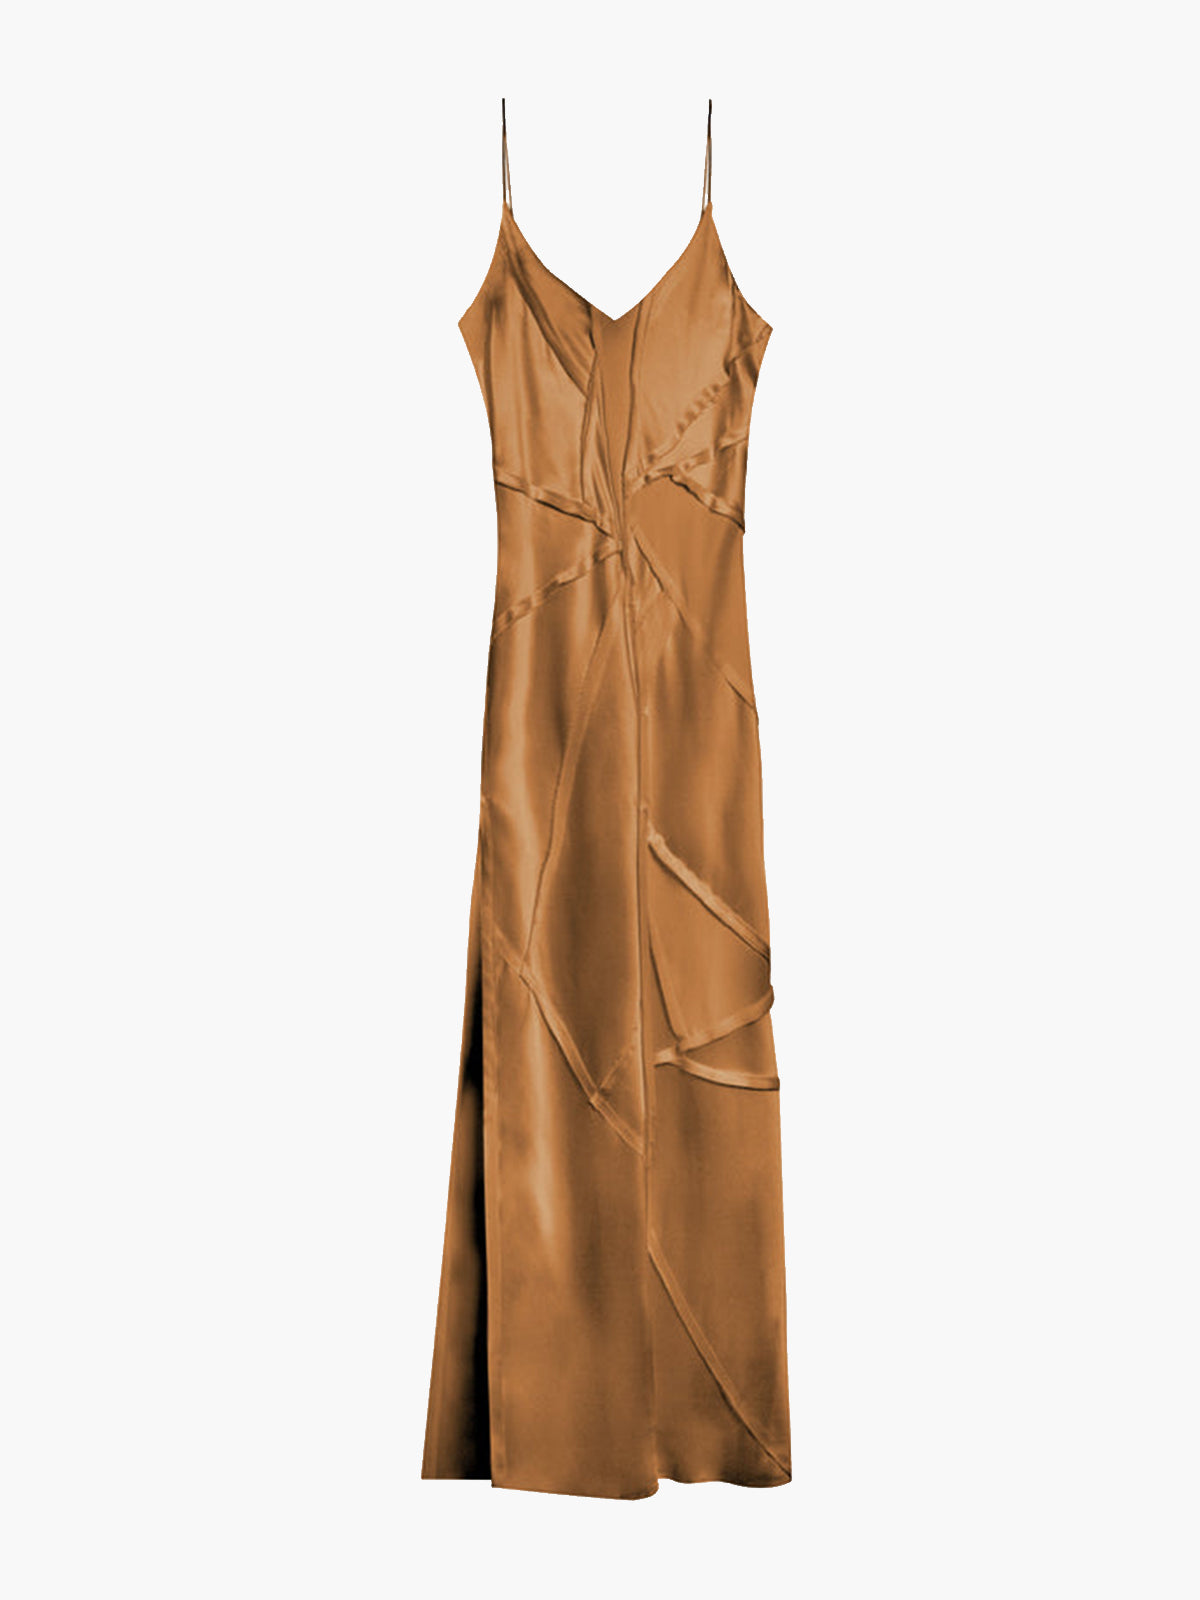 Elongated Recycled Dress with Slit | Walnut Elongated Recycled Dress with Slit | Walnut